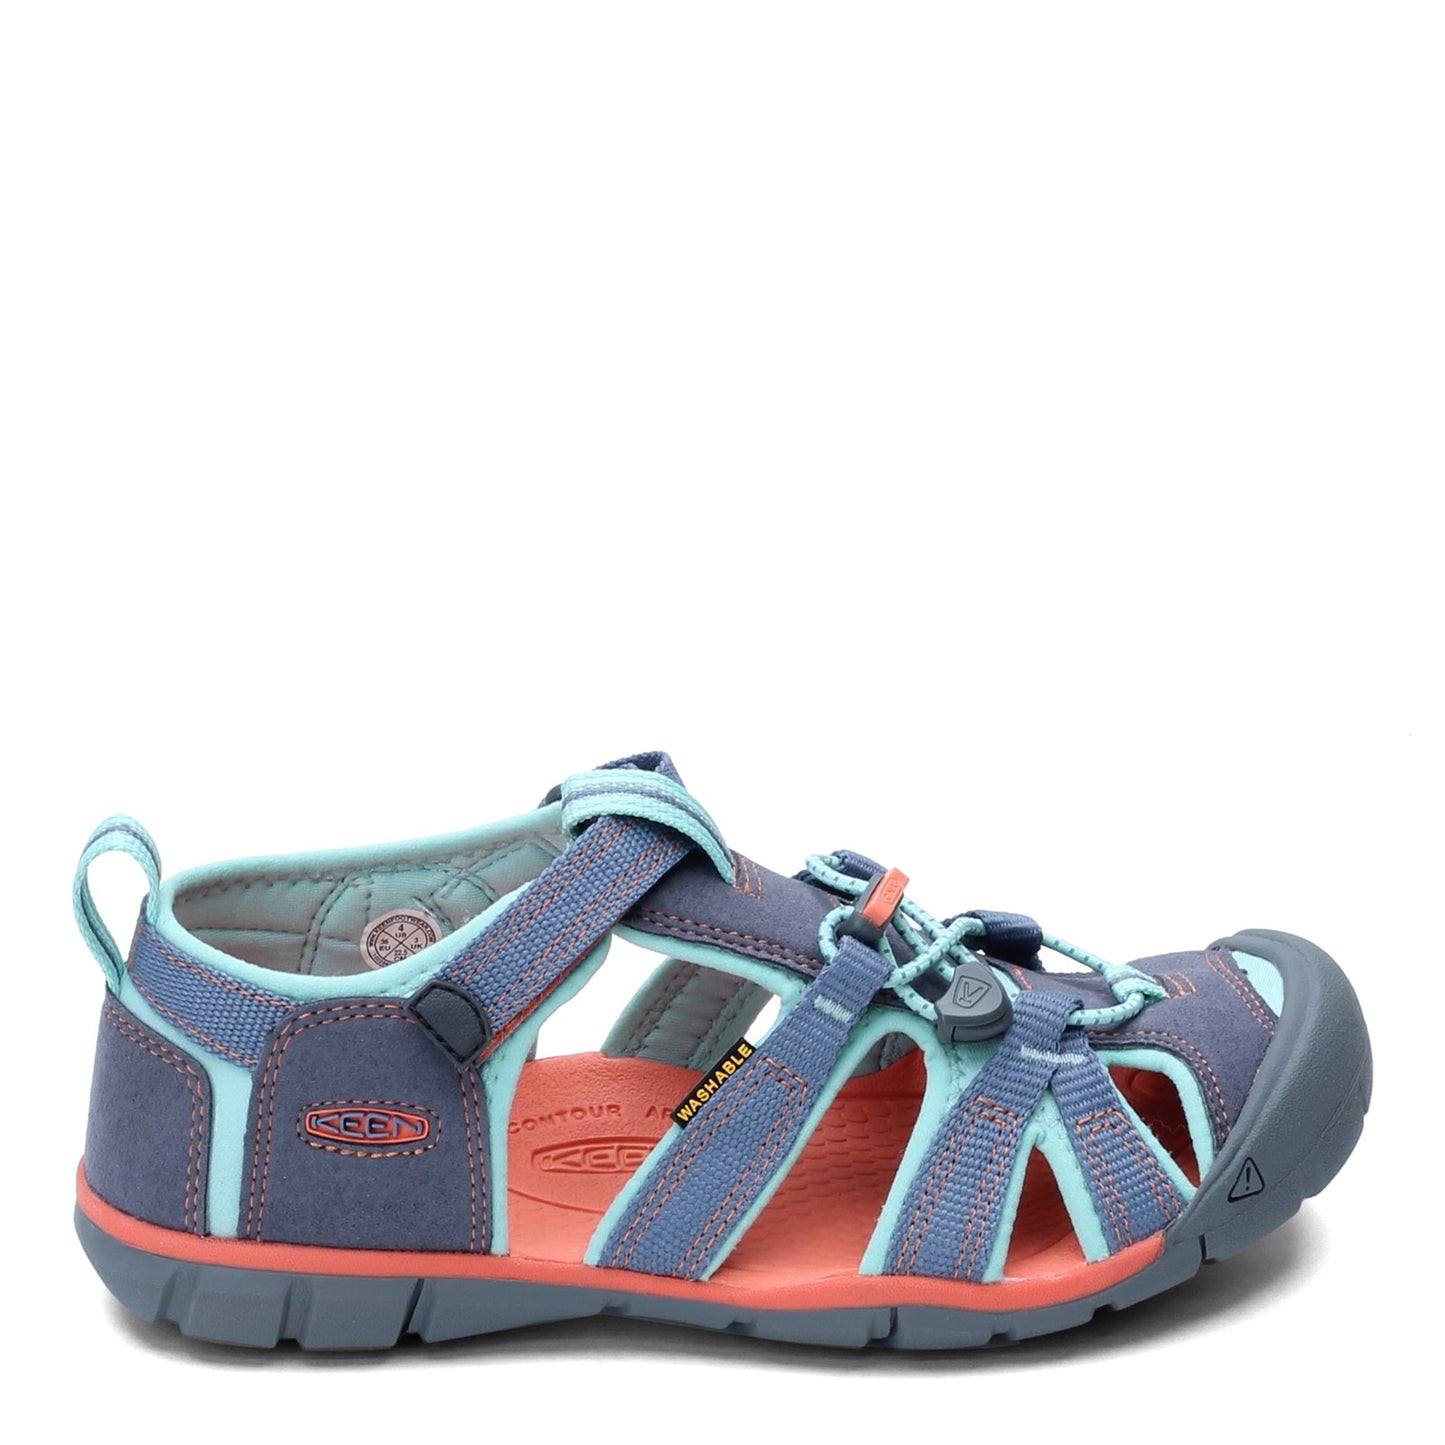 Peltz Shoes  Girl's Keen Seacamp II CNX Sandal - Little Kid Flint Stone/Ocean Wave 1022975